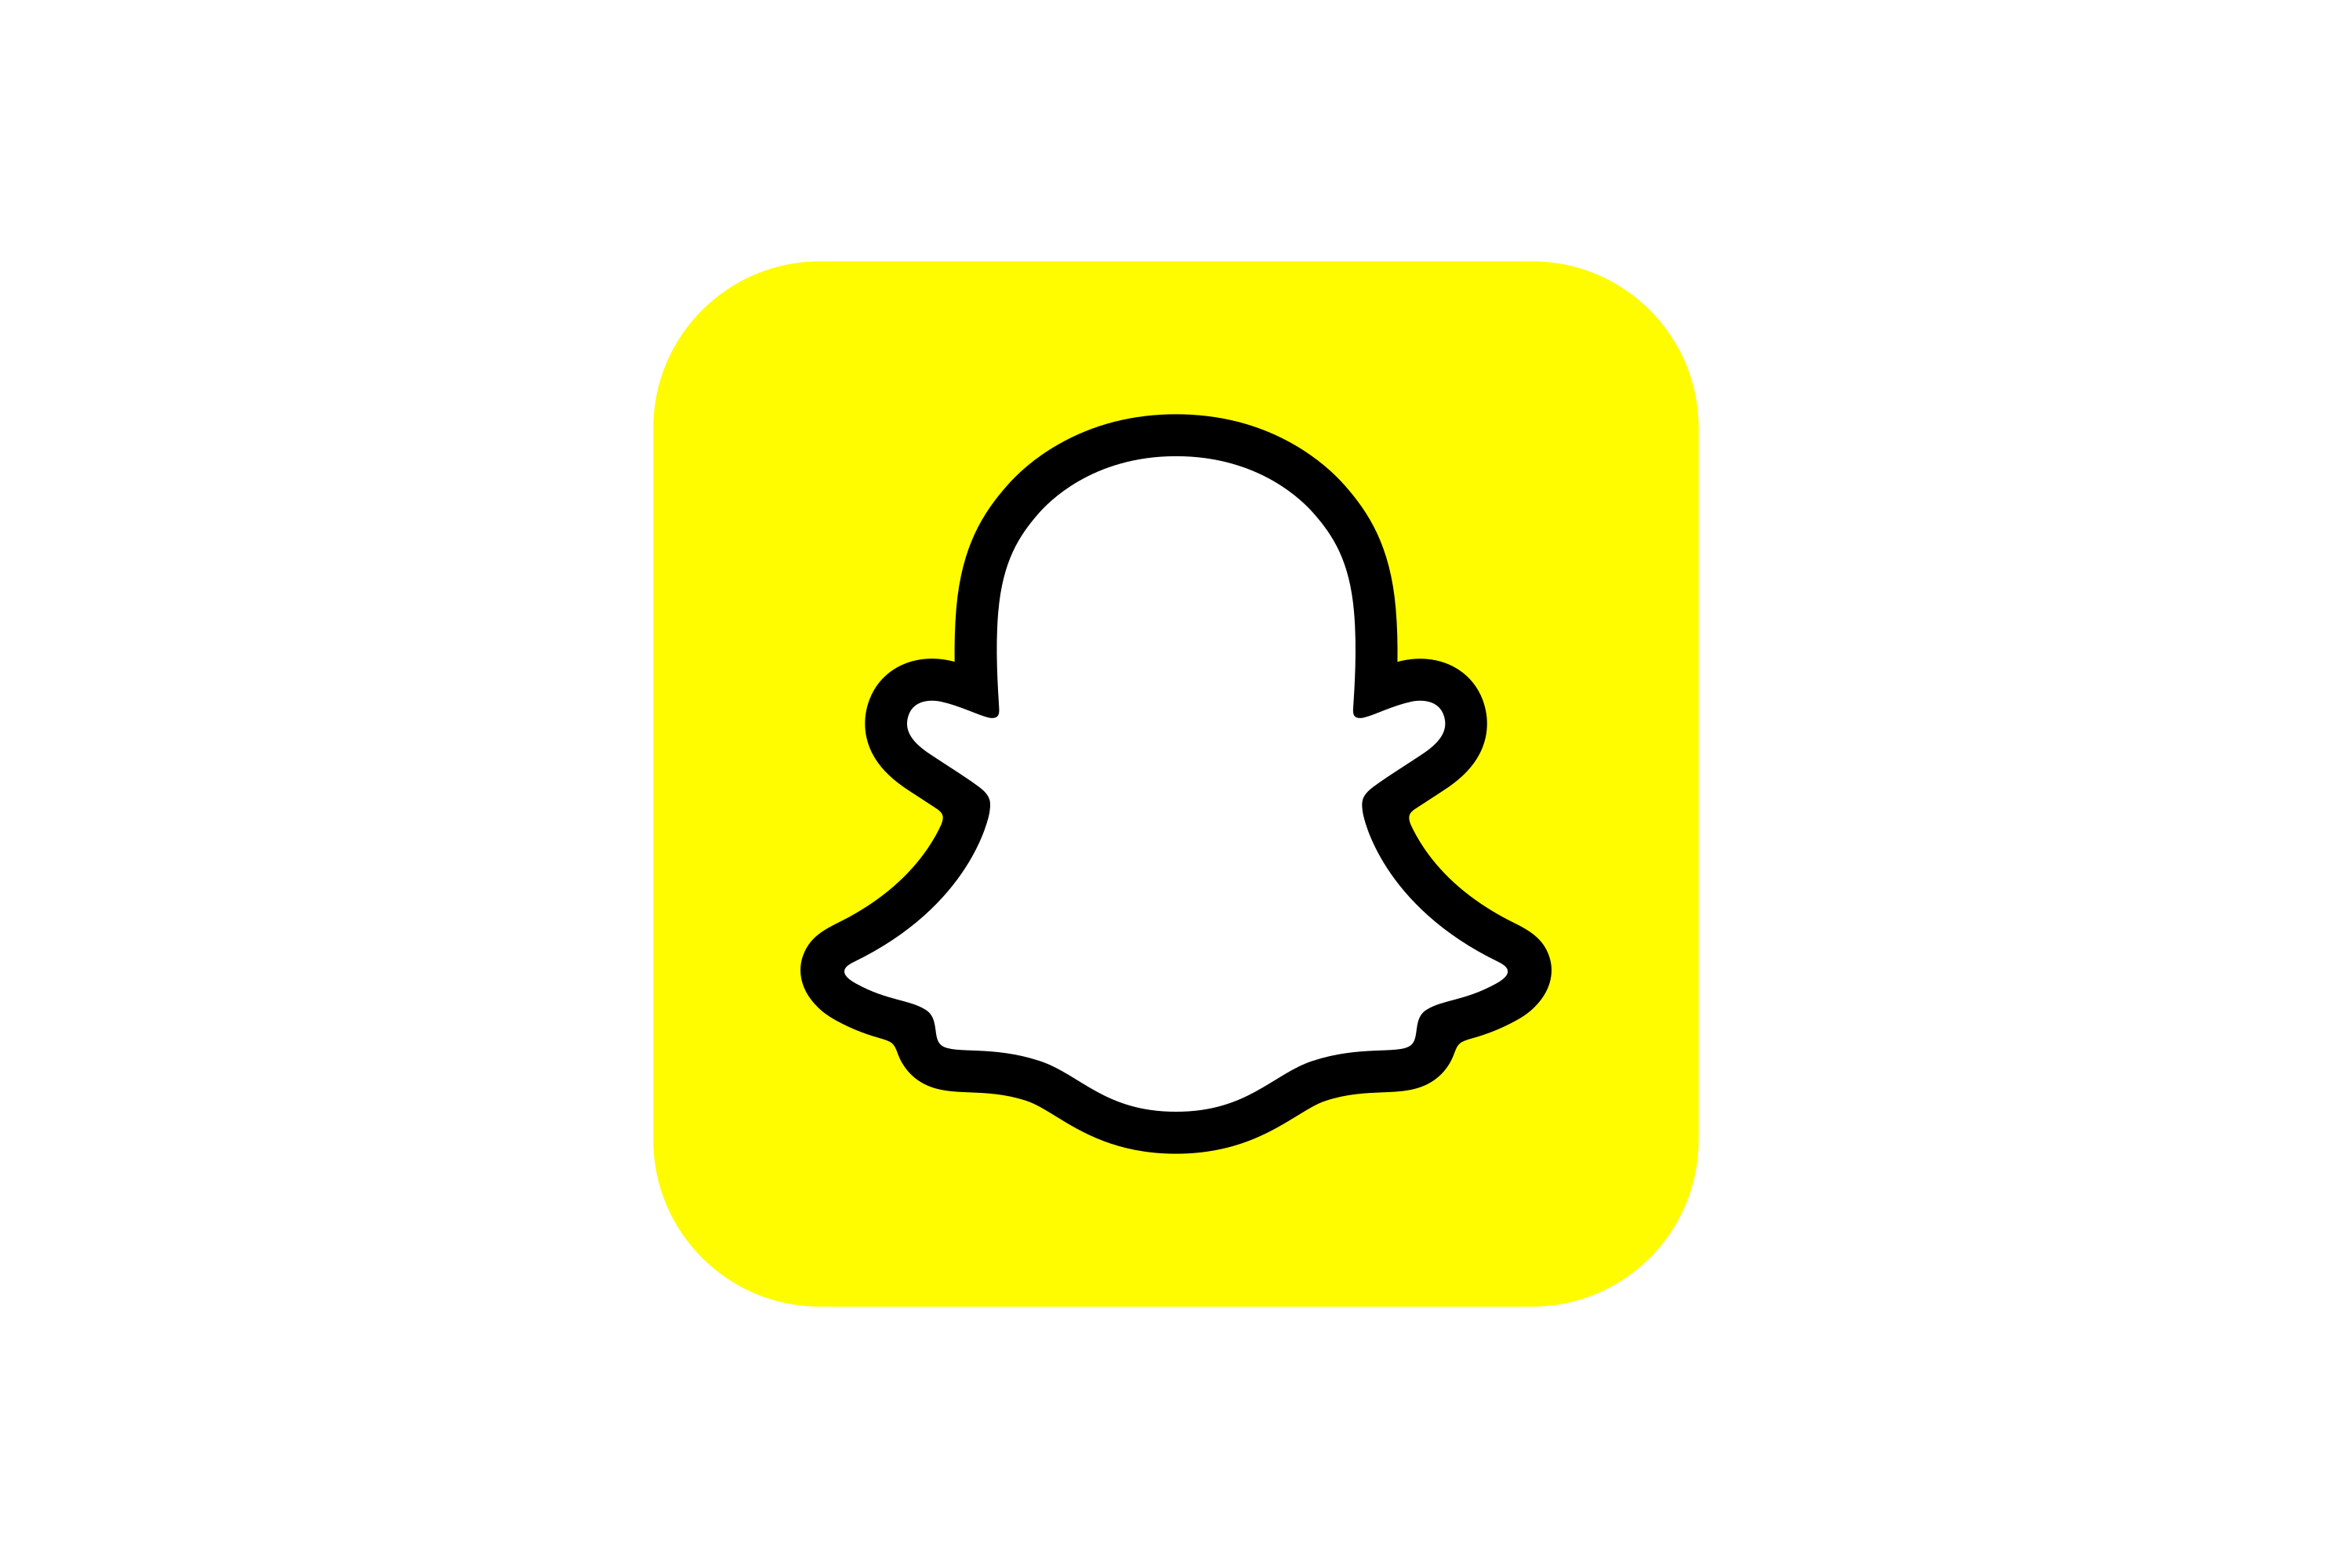 Download Snapchat Logo in SVG Vector or PNG File Format